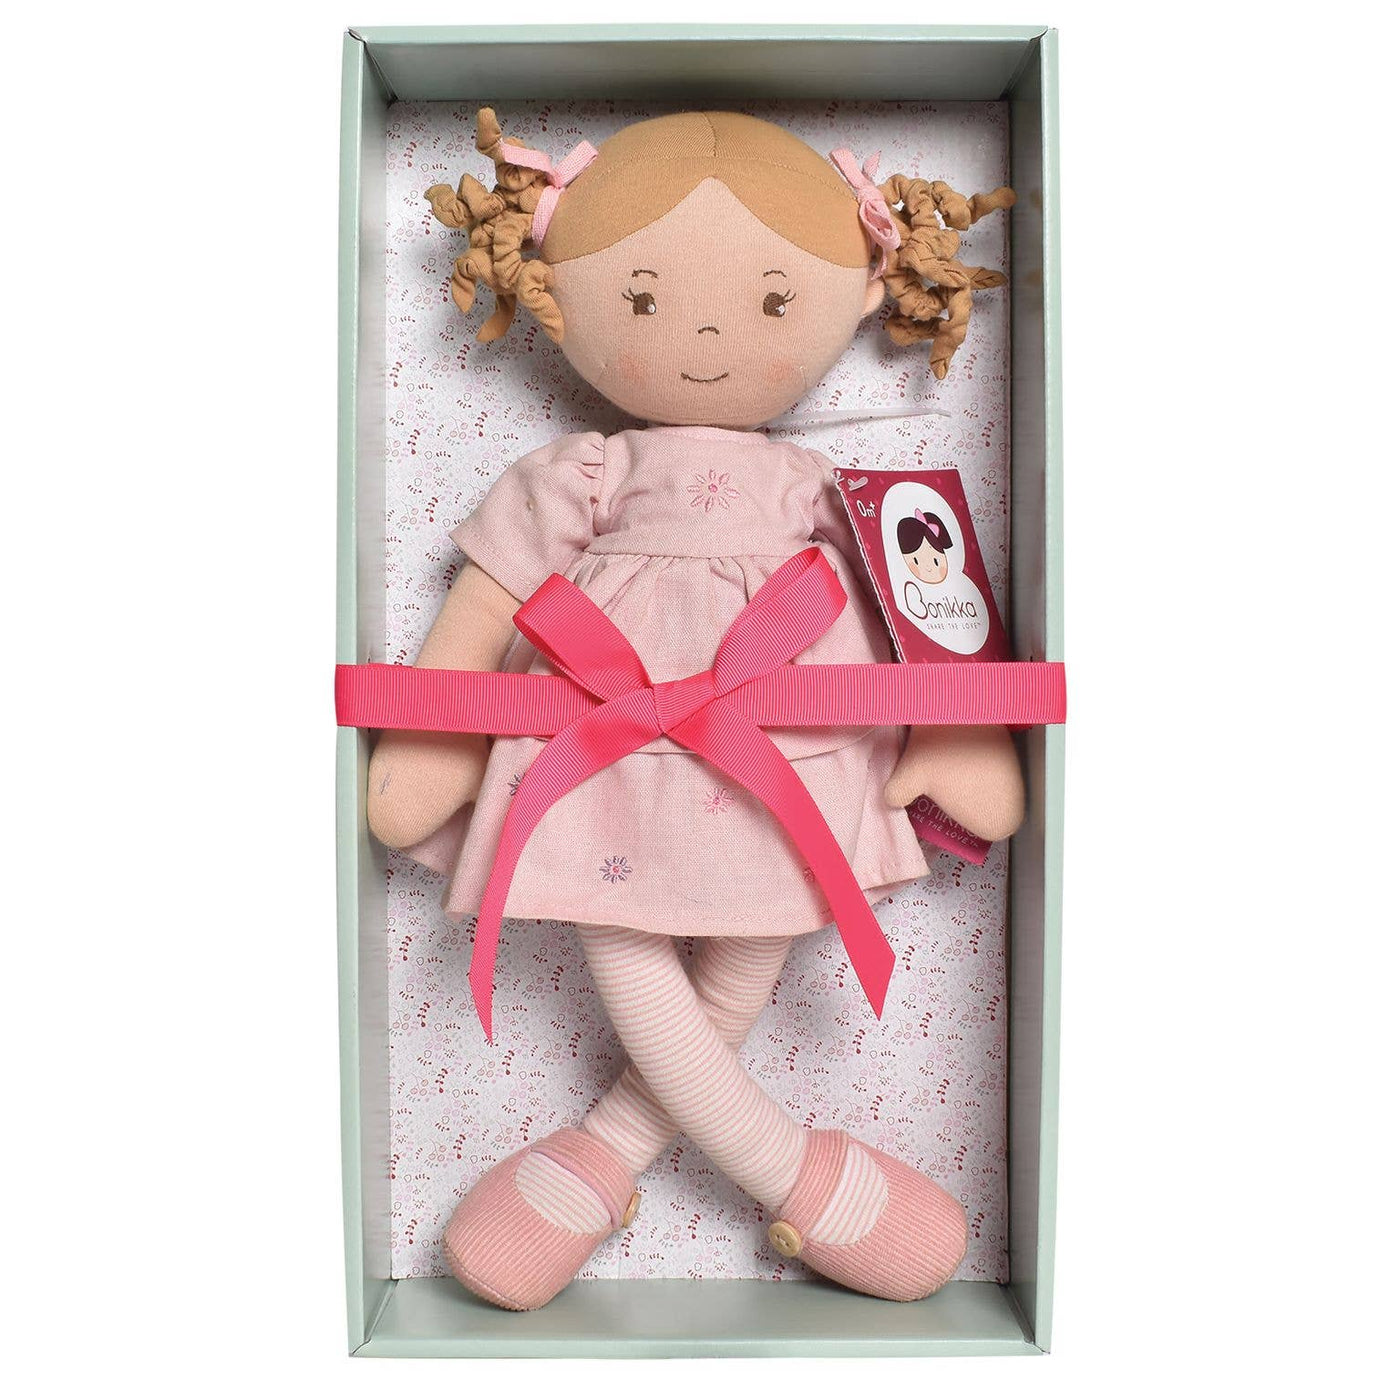 Tikiri Toys LLC Amelia Lt. Brown Hair Doll in Pink Linen Dress w/Display Box - Simple Good